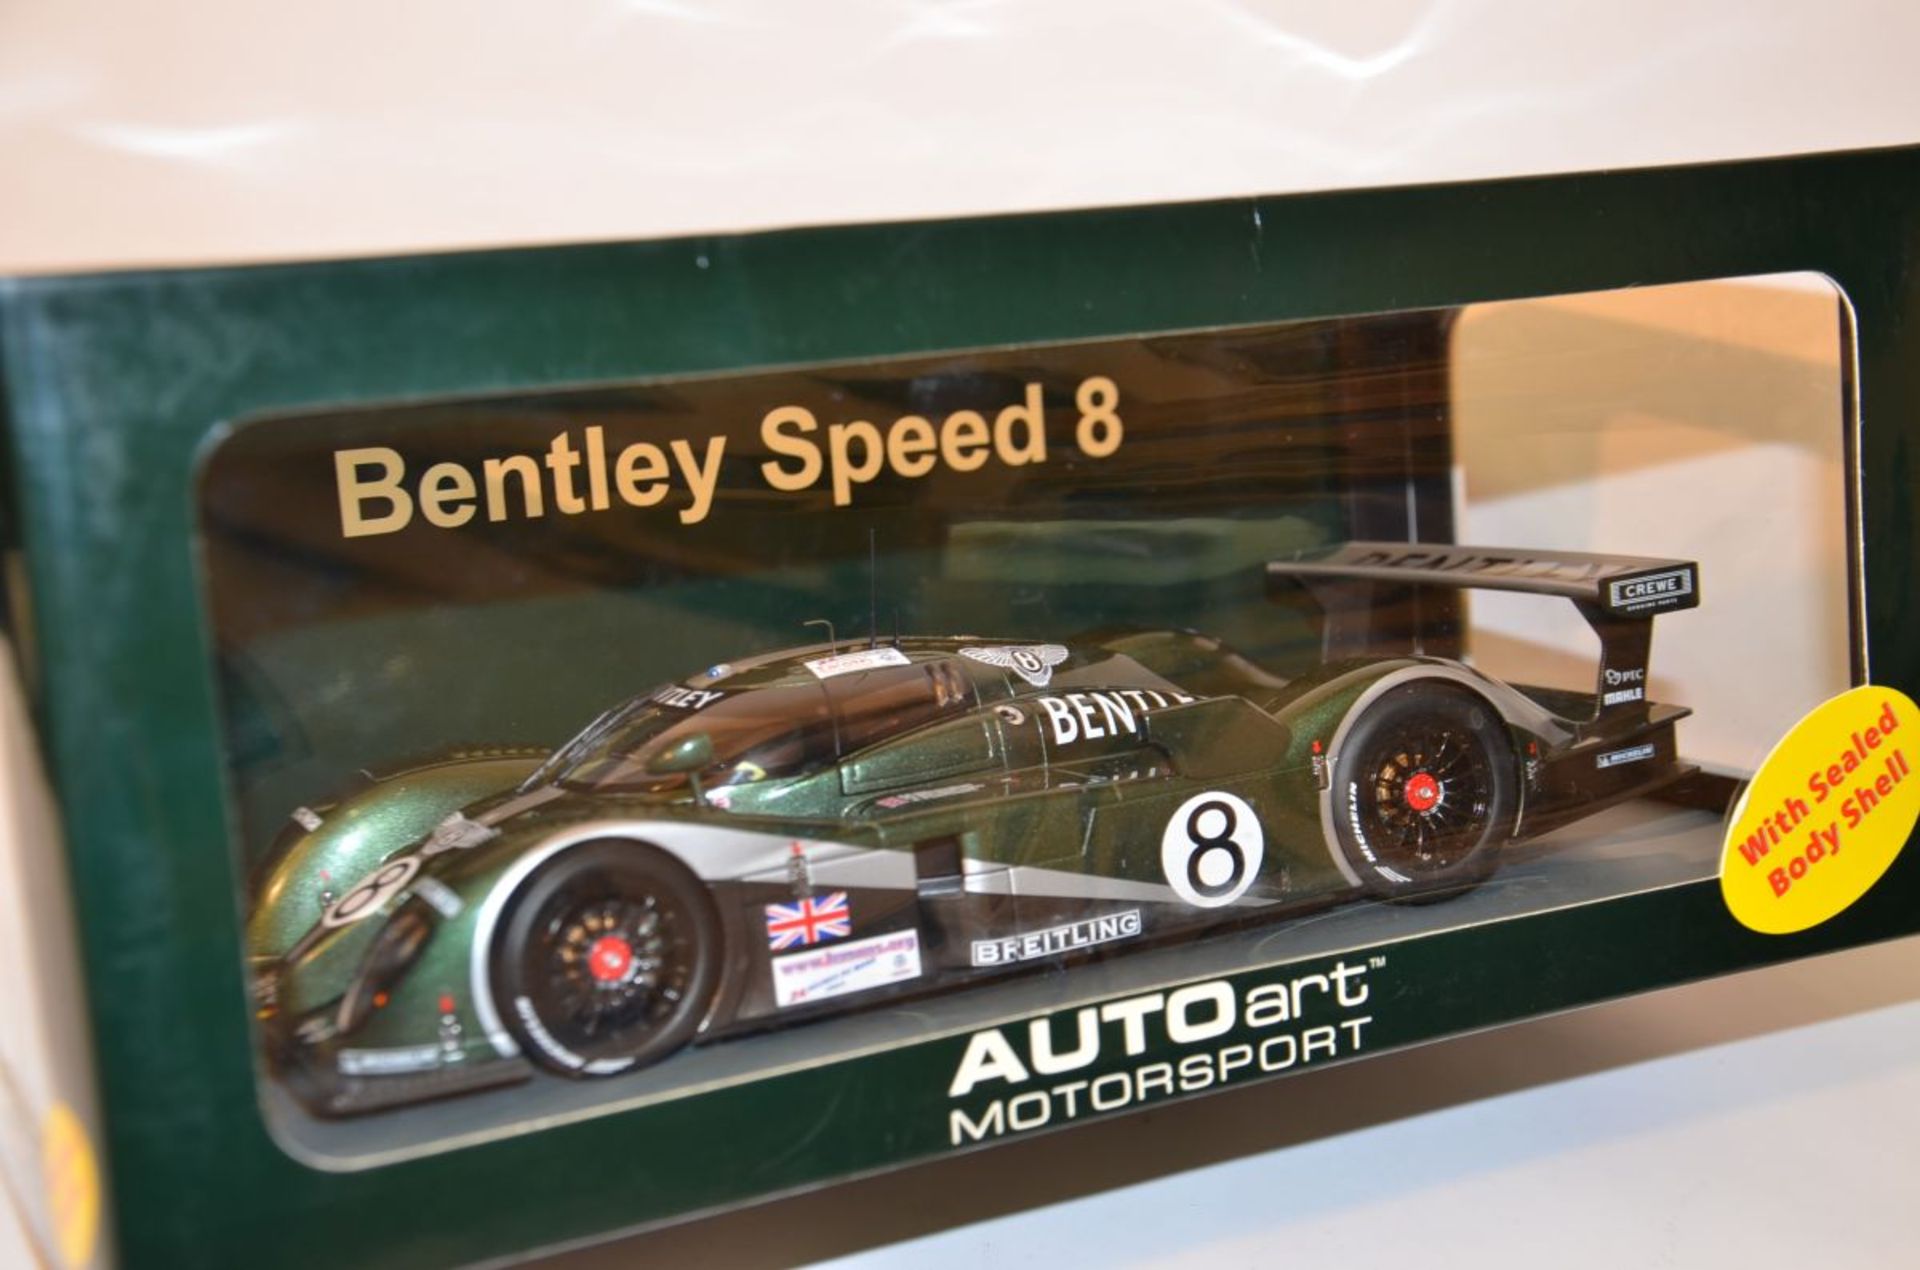 AUTOart Motorsport "Bentley Speed 8 Le Mans 2003" - Bild 2 aus 3